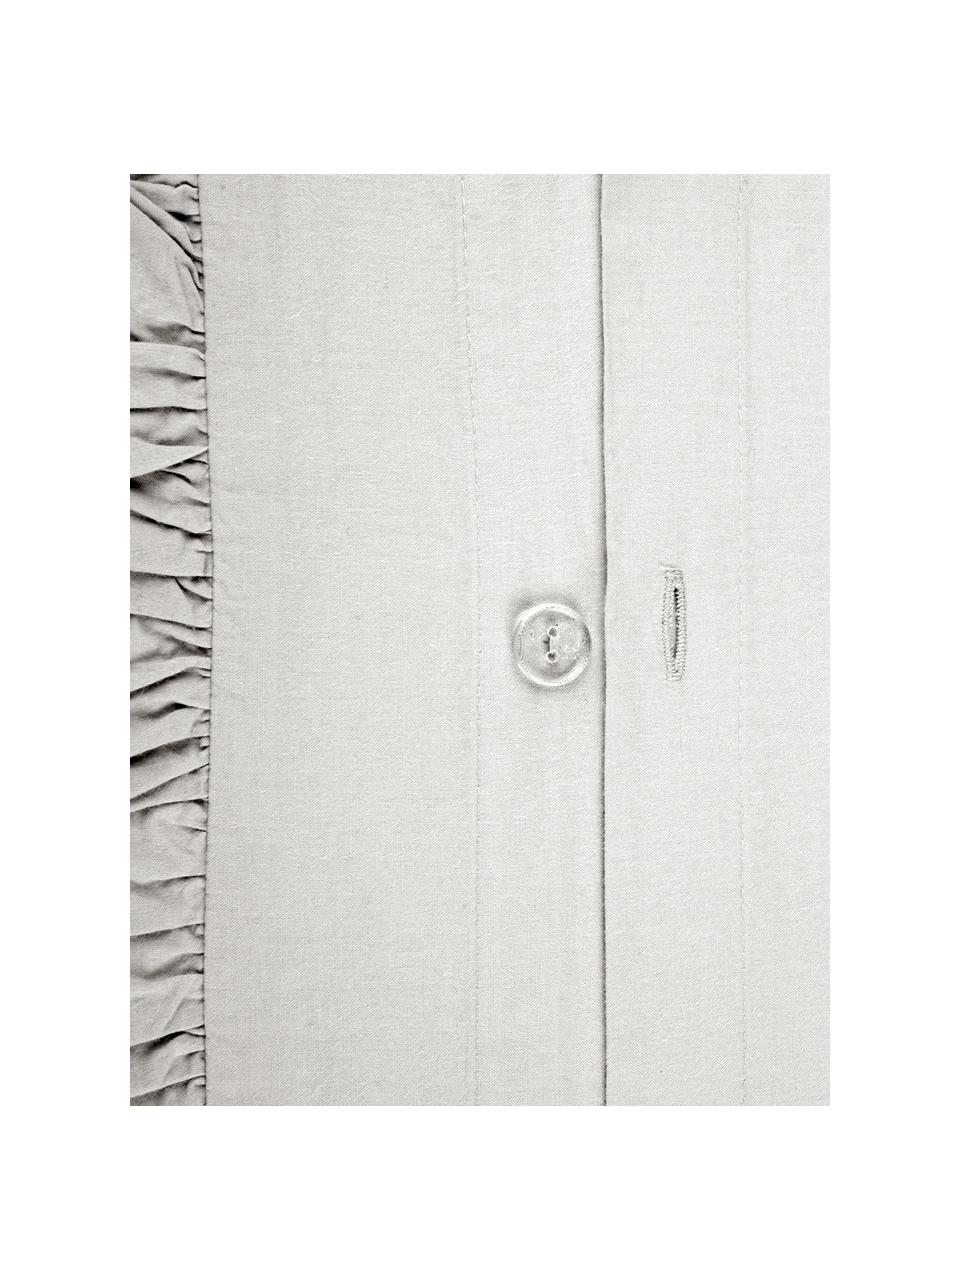 Gewaschener Baumwoll-Bettdeckenbezug Florence mit Rüschen, Webart: Perkal Fadendichte 180 TC, Hellgrau, B 200 x L 210 cm